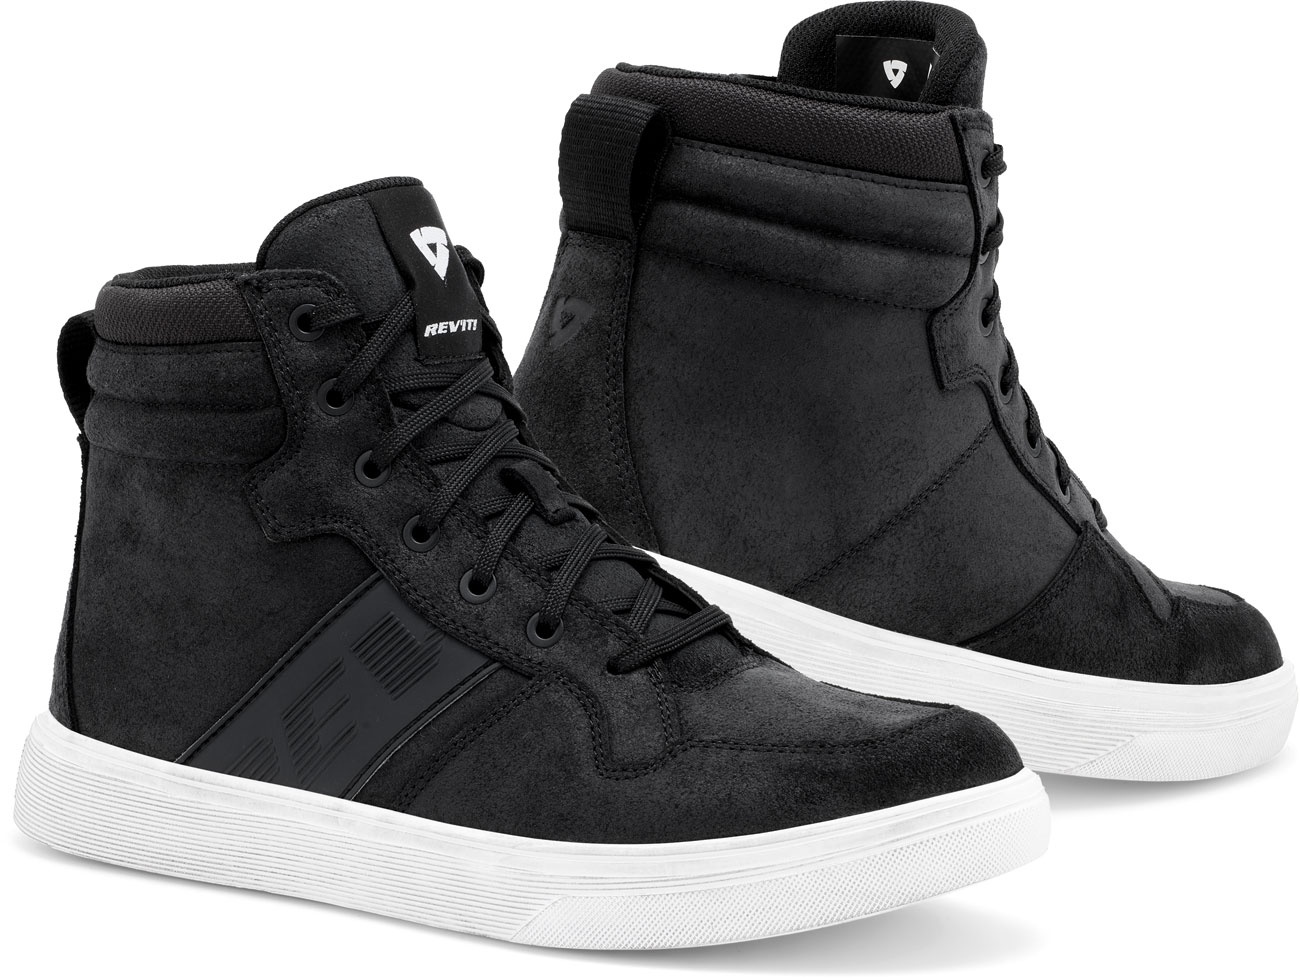 Revit Kick, chaussures - Noir/Blanc - 41 EU